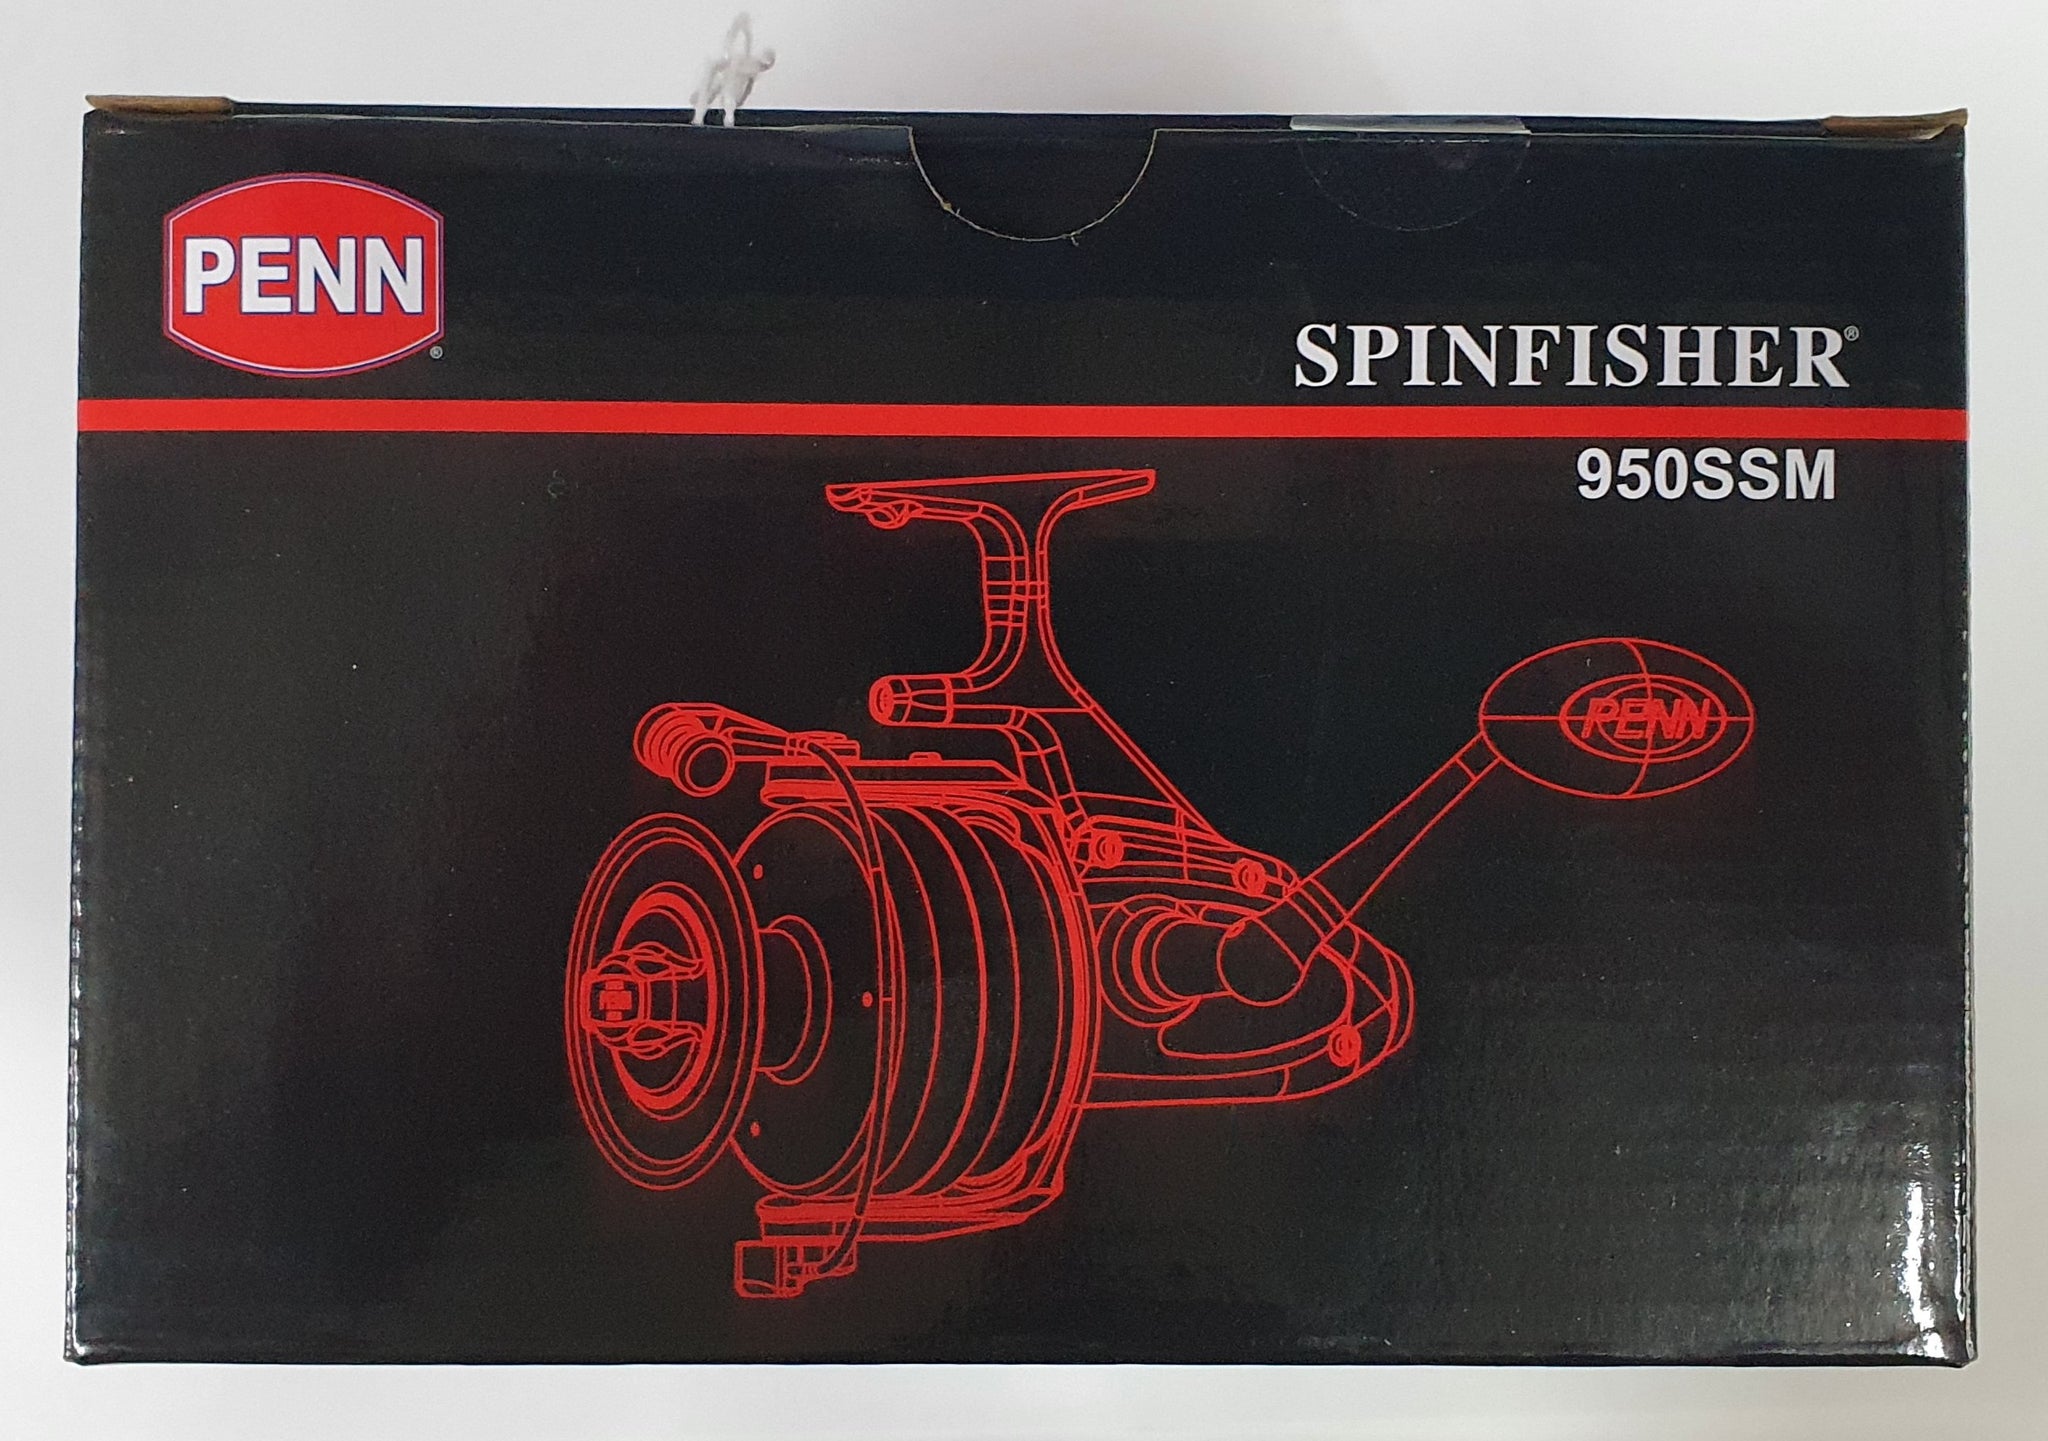 Penn Spinfisher 950SSM Spinning Reel